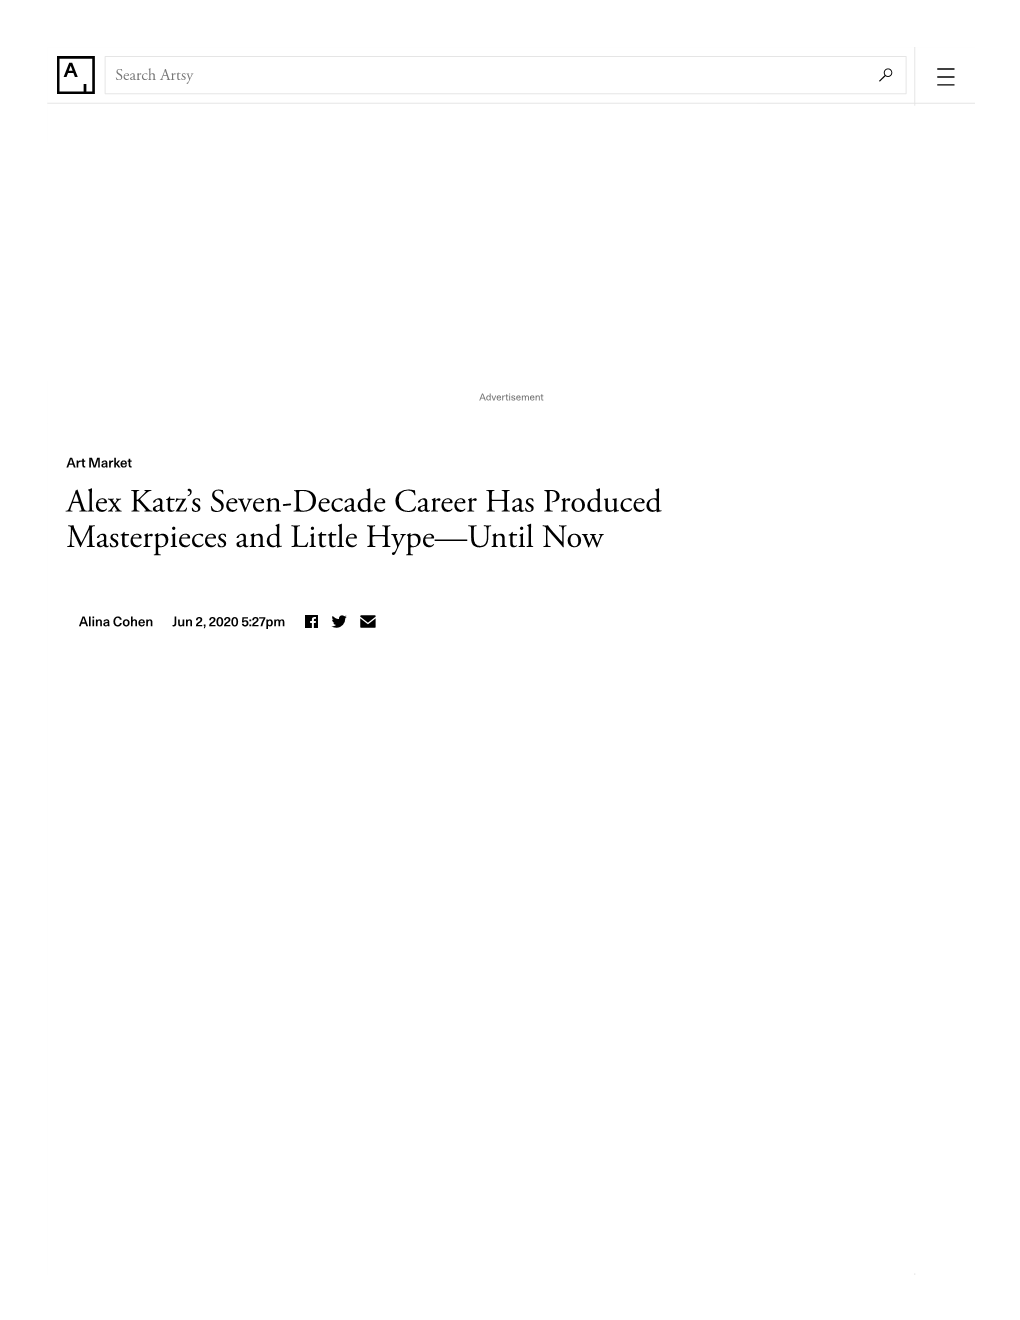 Alex Katz's Seven-Decade Career Has Produced Masterpieces And